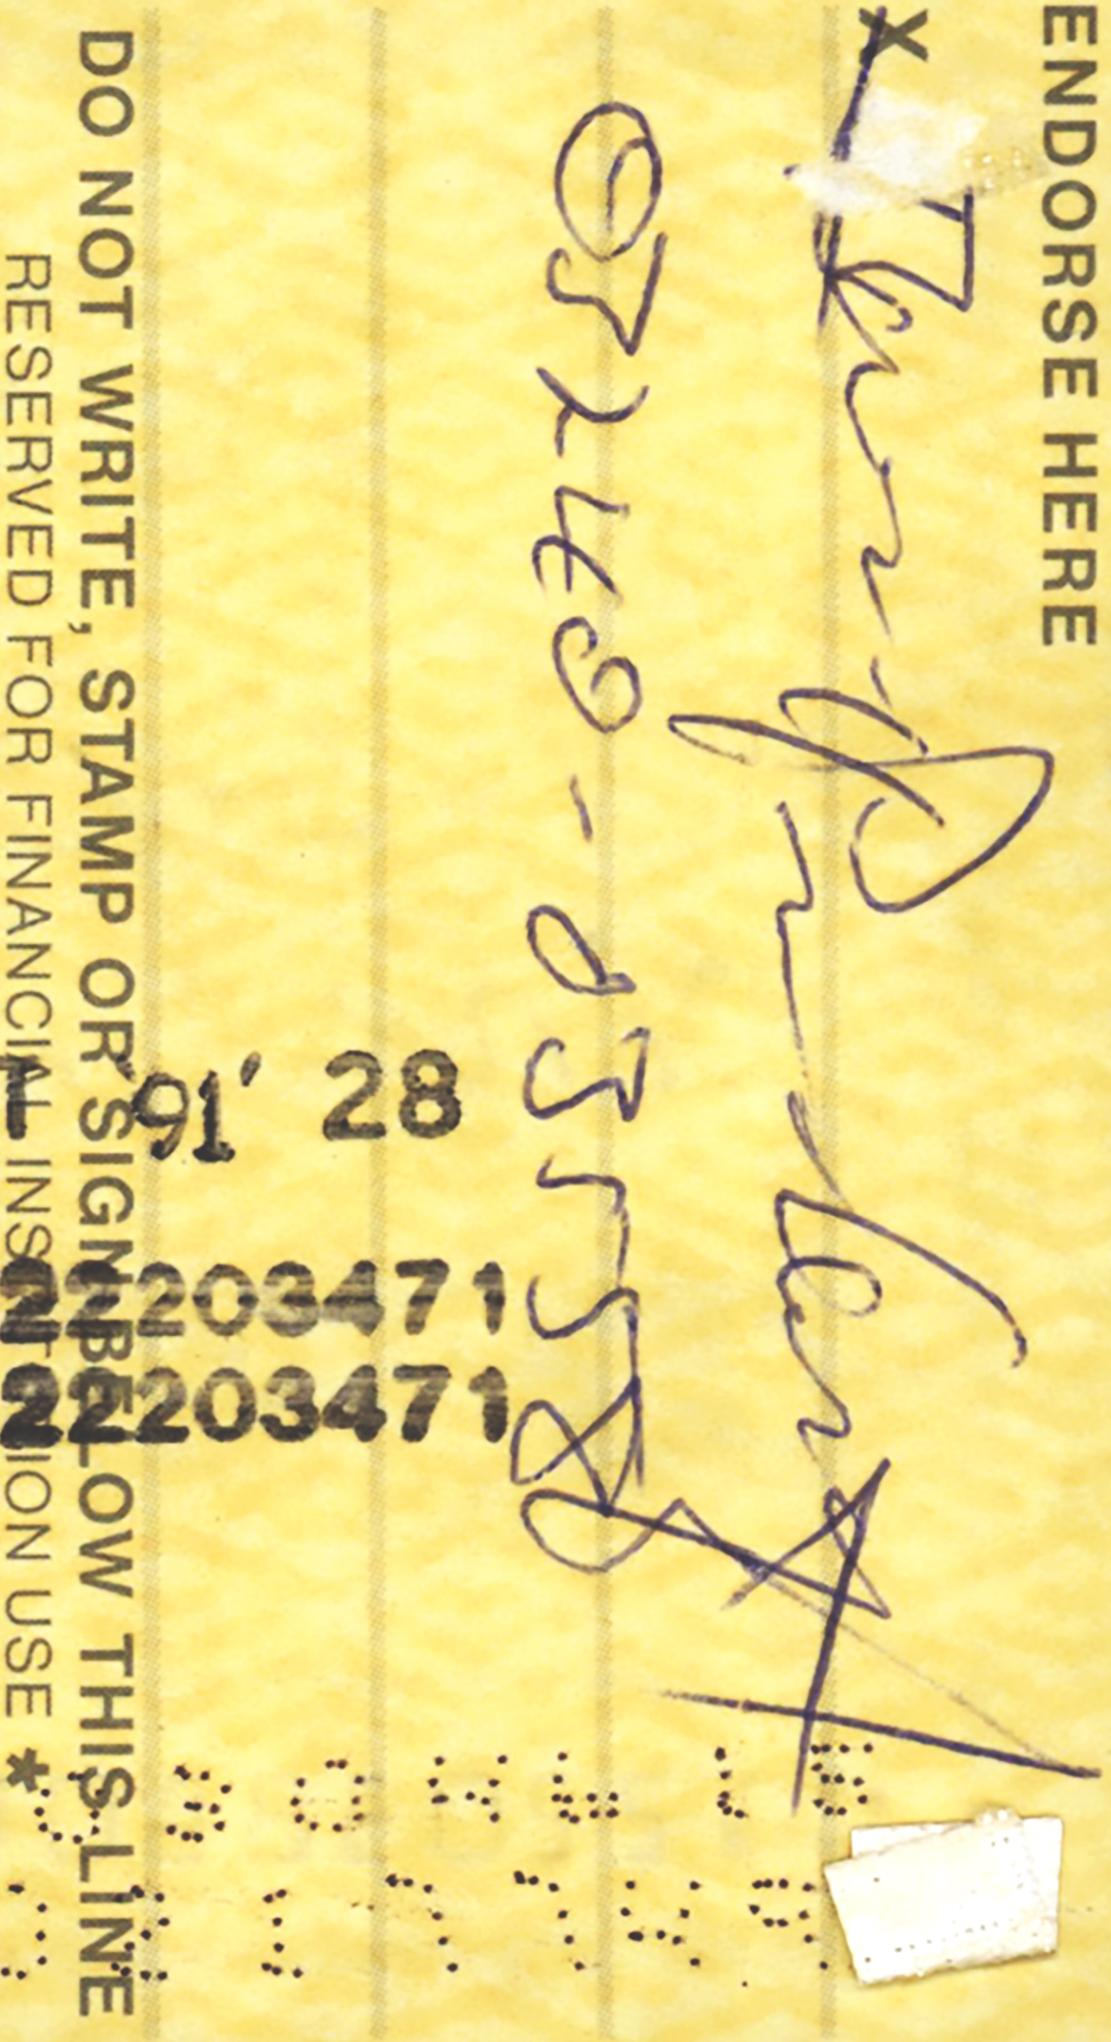 David Hockney signed check 1991:
A rare early 1990s hand-signed David Hockney bank check, to 